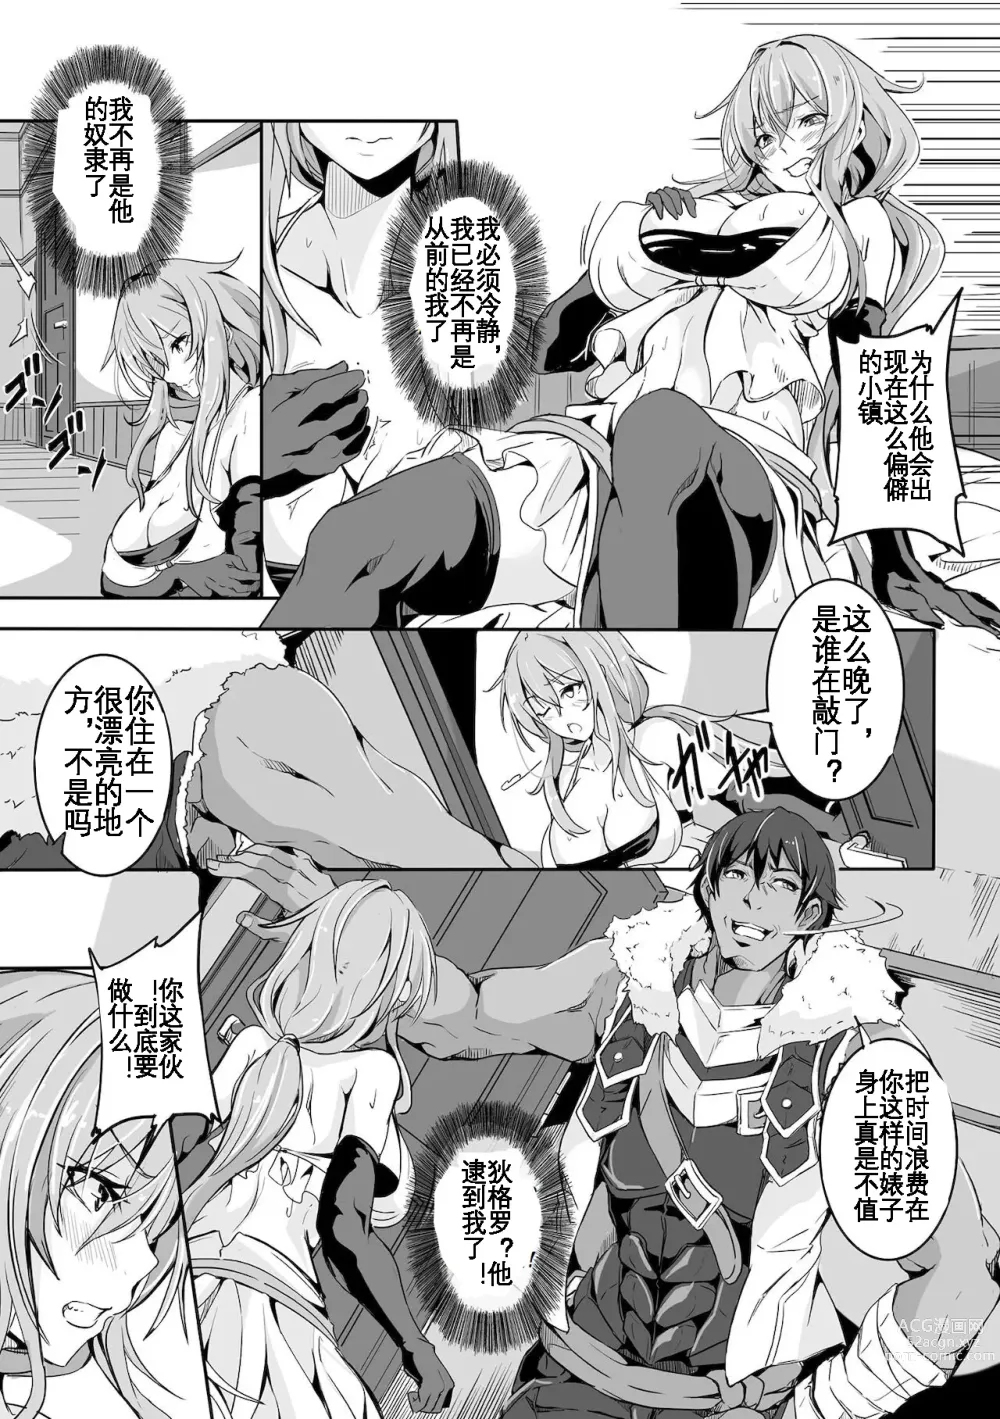 Page 6 of manga Slave Return